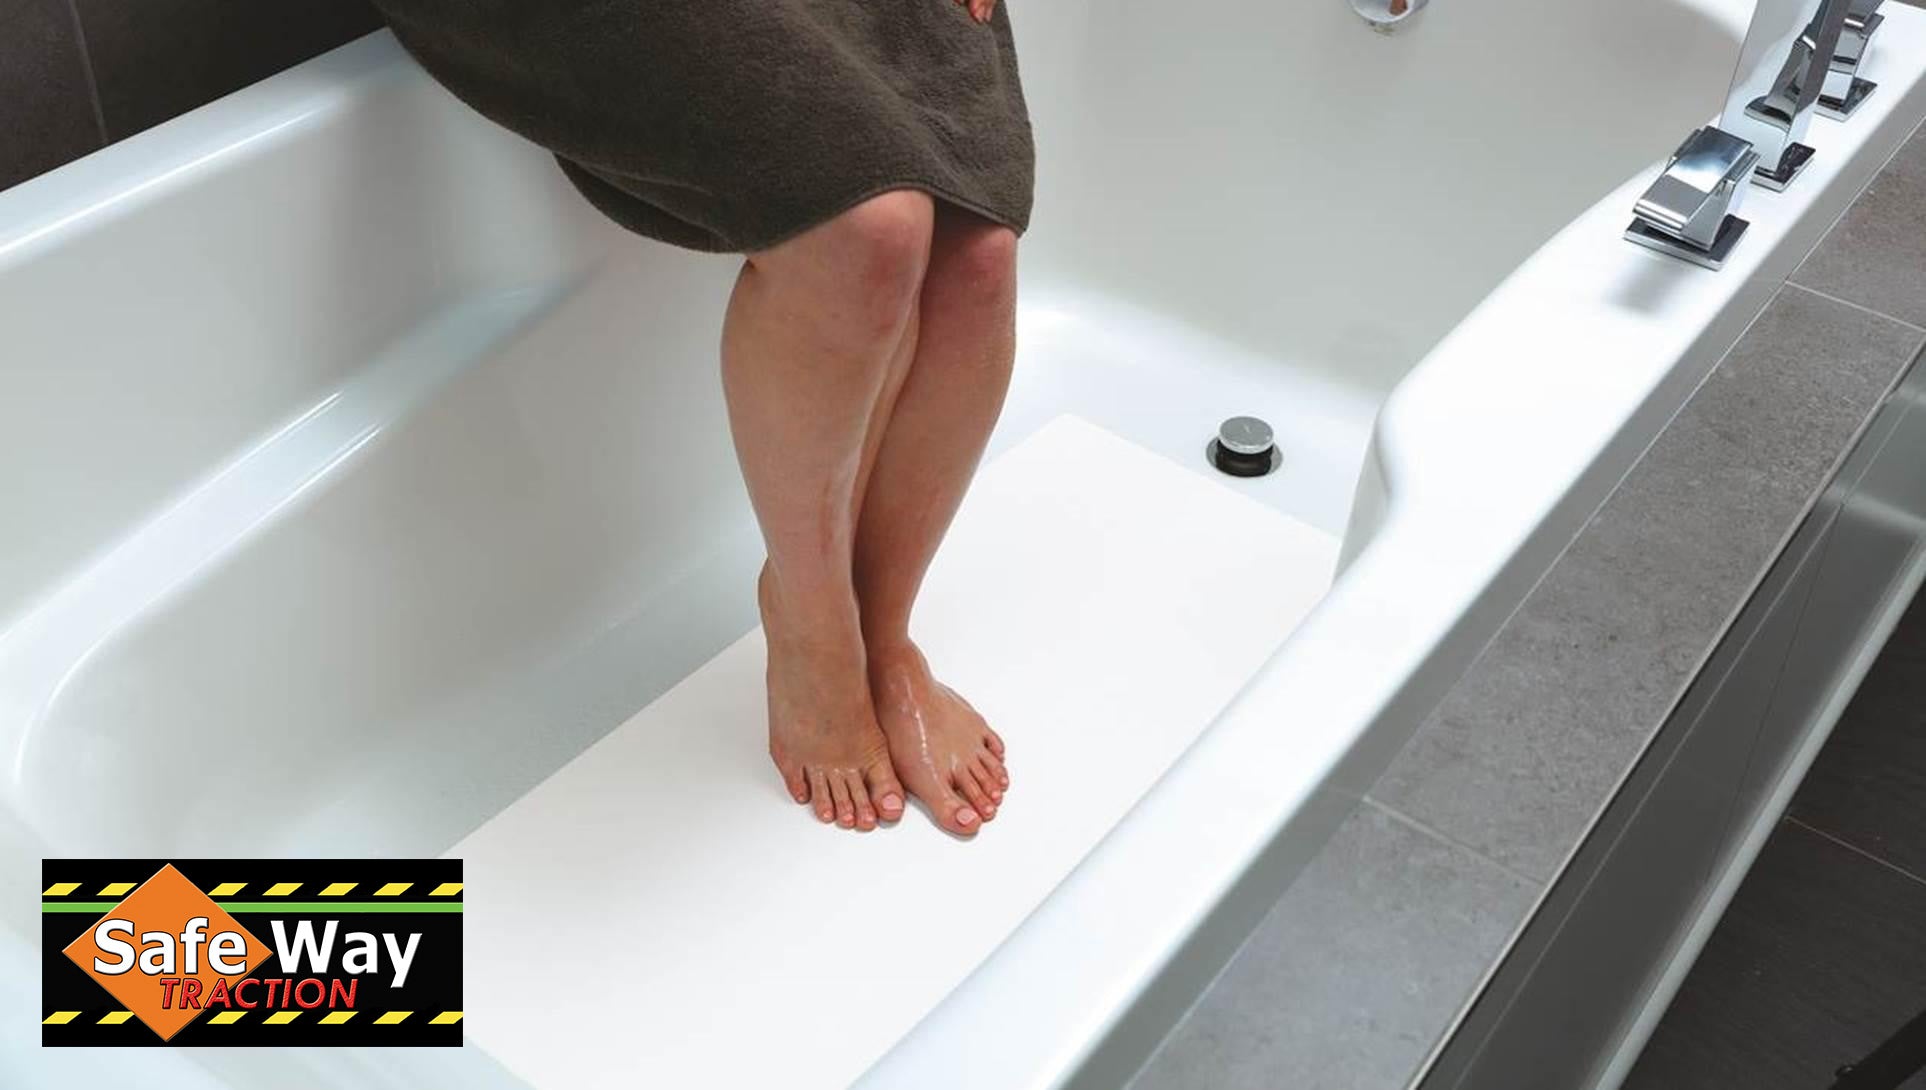 Safe Way Traction Non-Slip Adhesive Bath Mats and Tub Liners